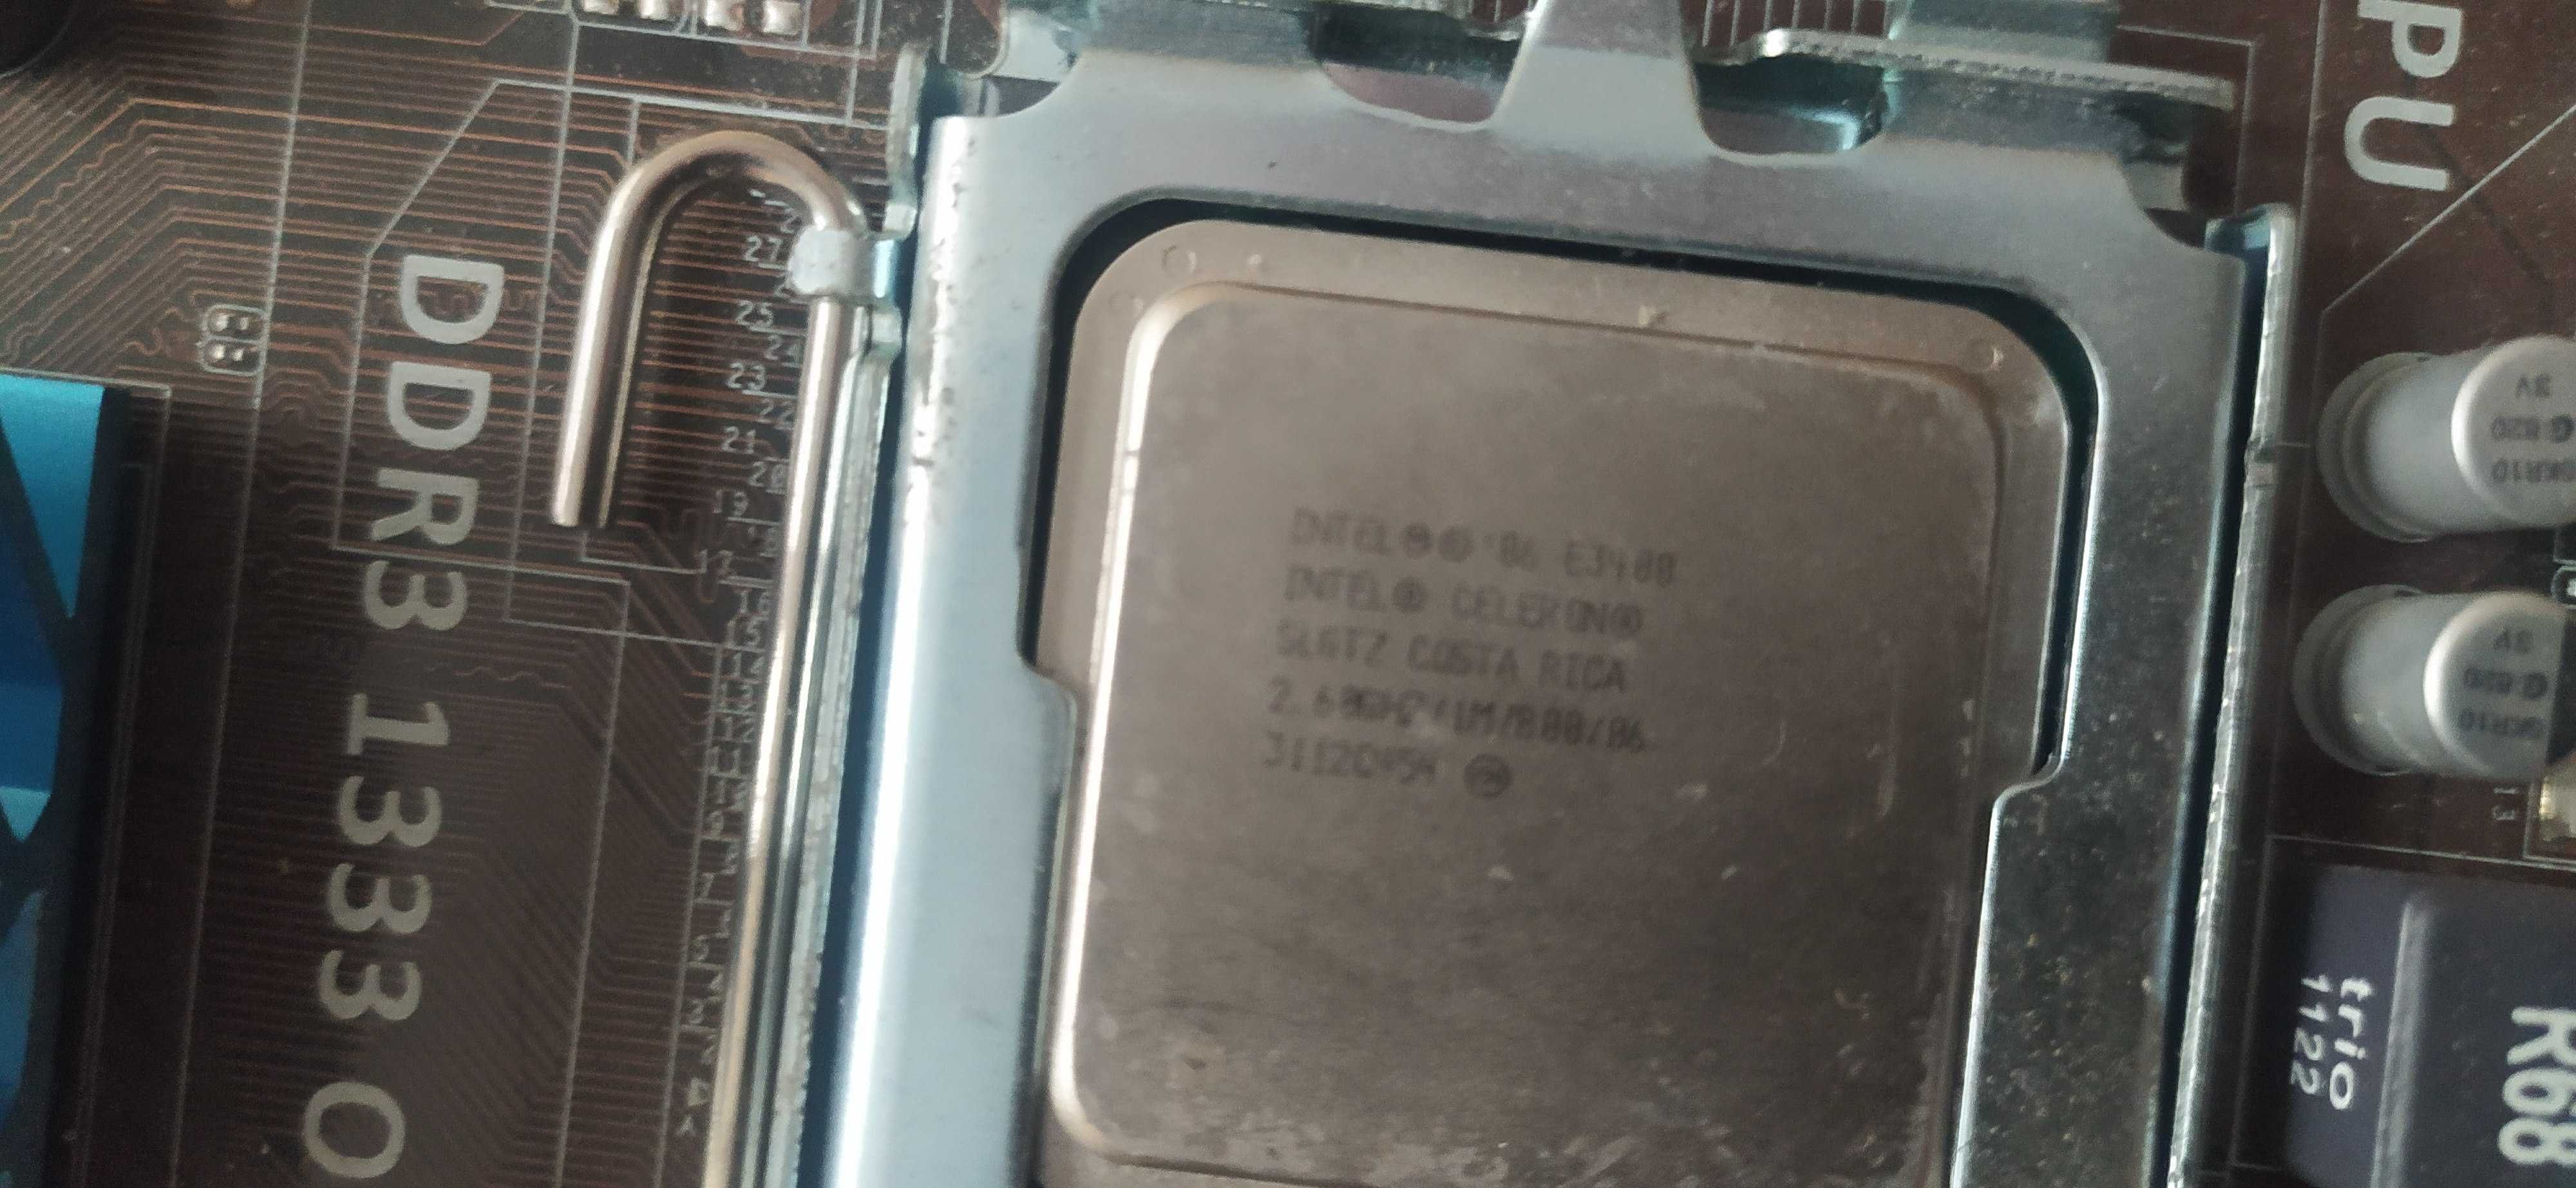 Płyta główna ASUS P5G41T-M LX (socket 775] procesor intel celeron